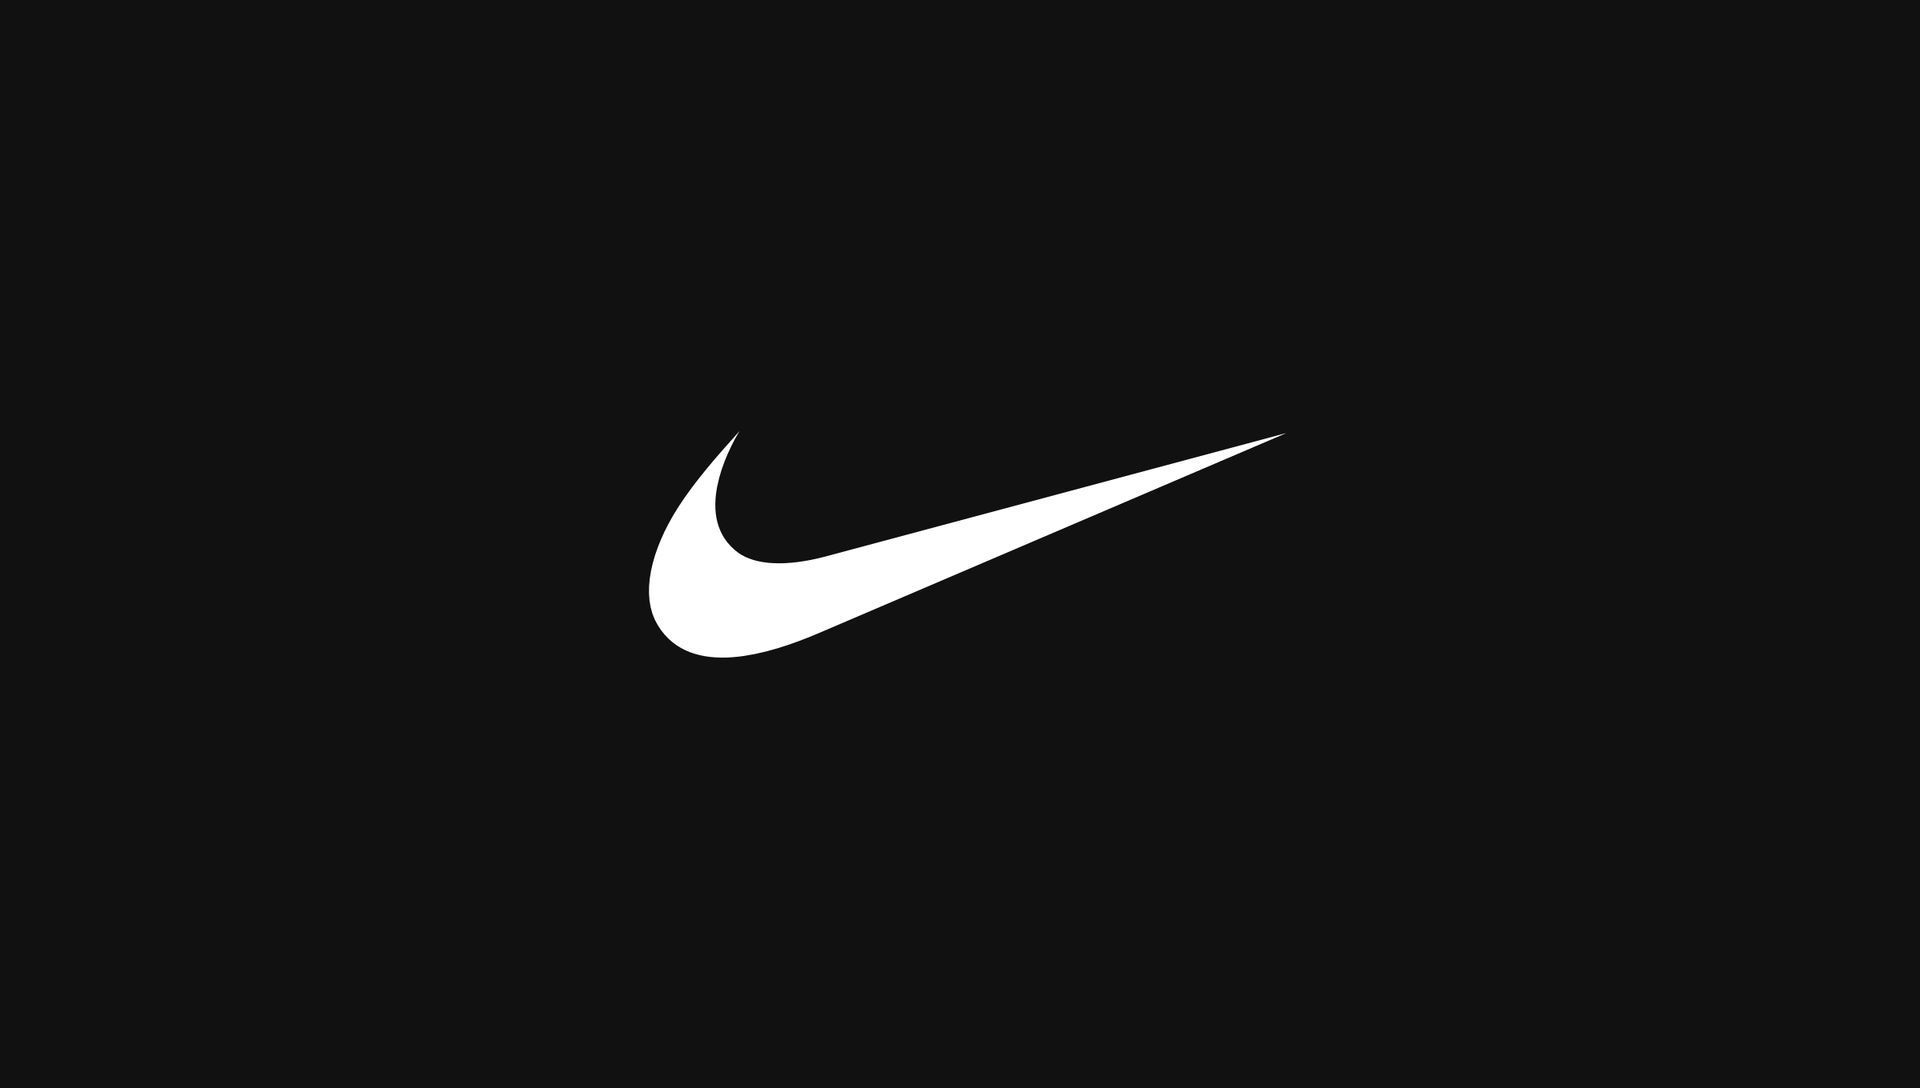 Caligrafía Charles Keasing Minimizar Men's Tops & Tees Size Chart. Nike.com